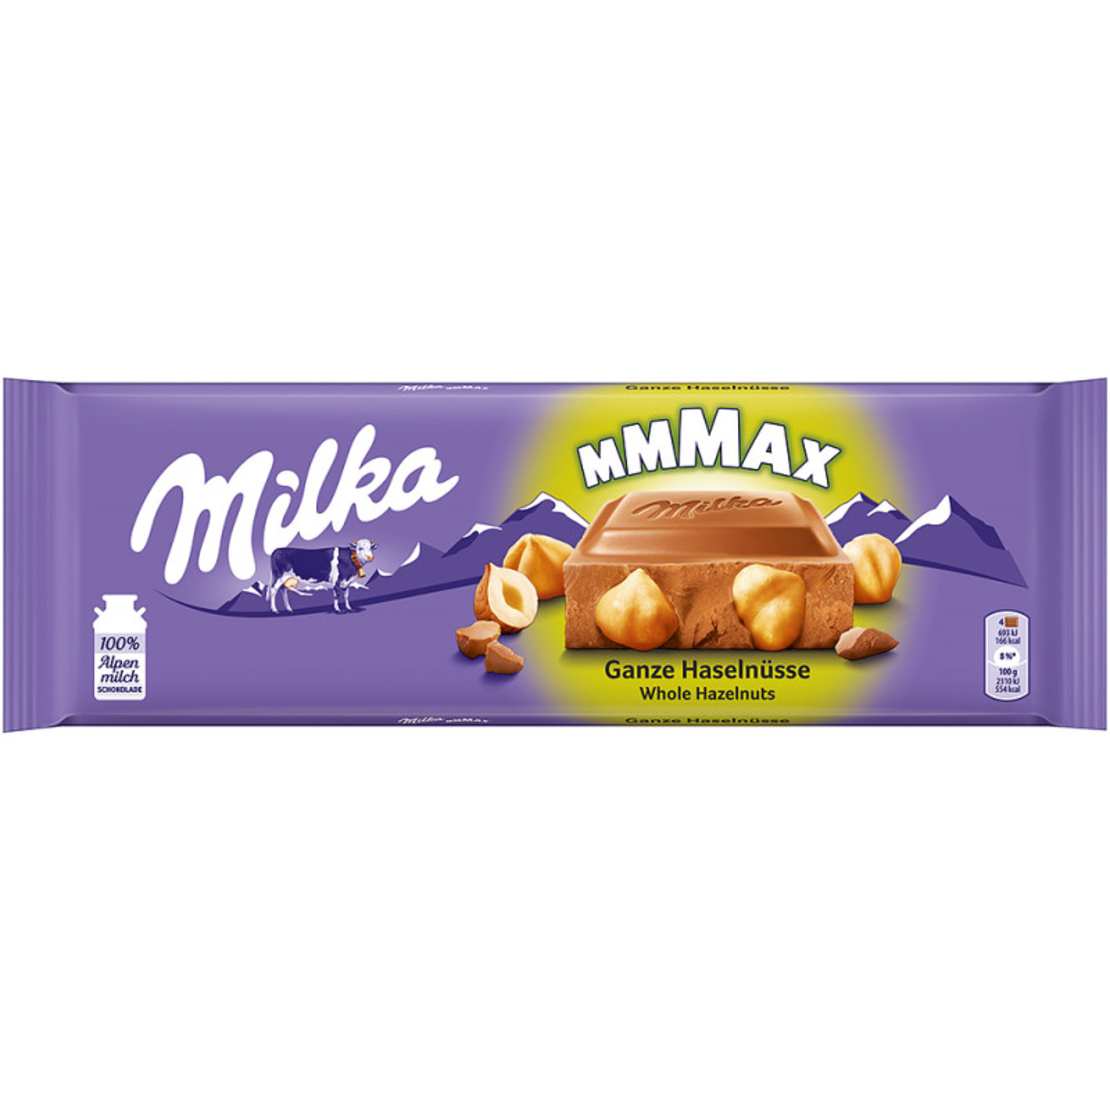 Milka - Mmmax - Whole Hazelnuts 270g